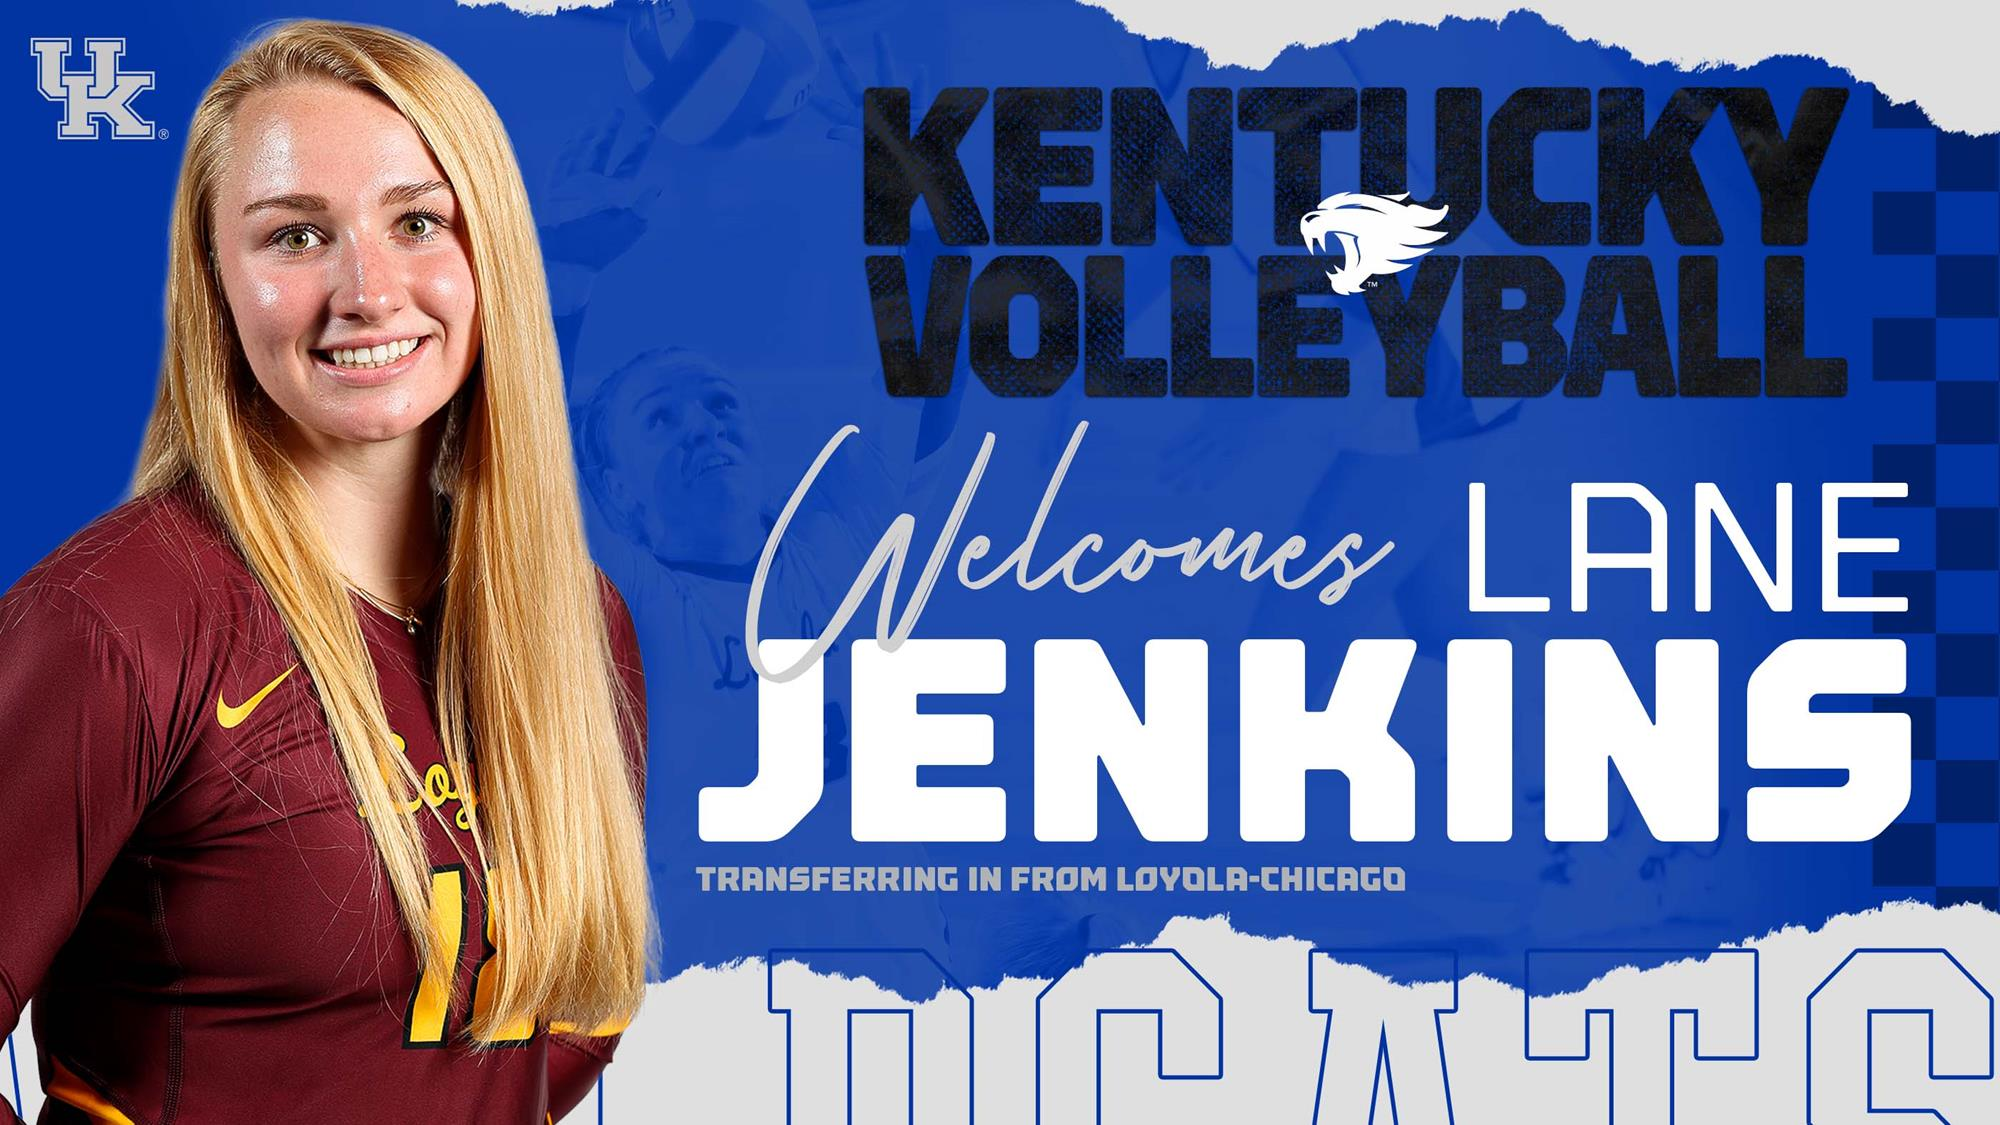 Lexington Native Lane Jenkins Transfers into Kentucky Volleyball